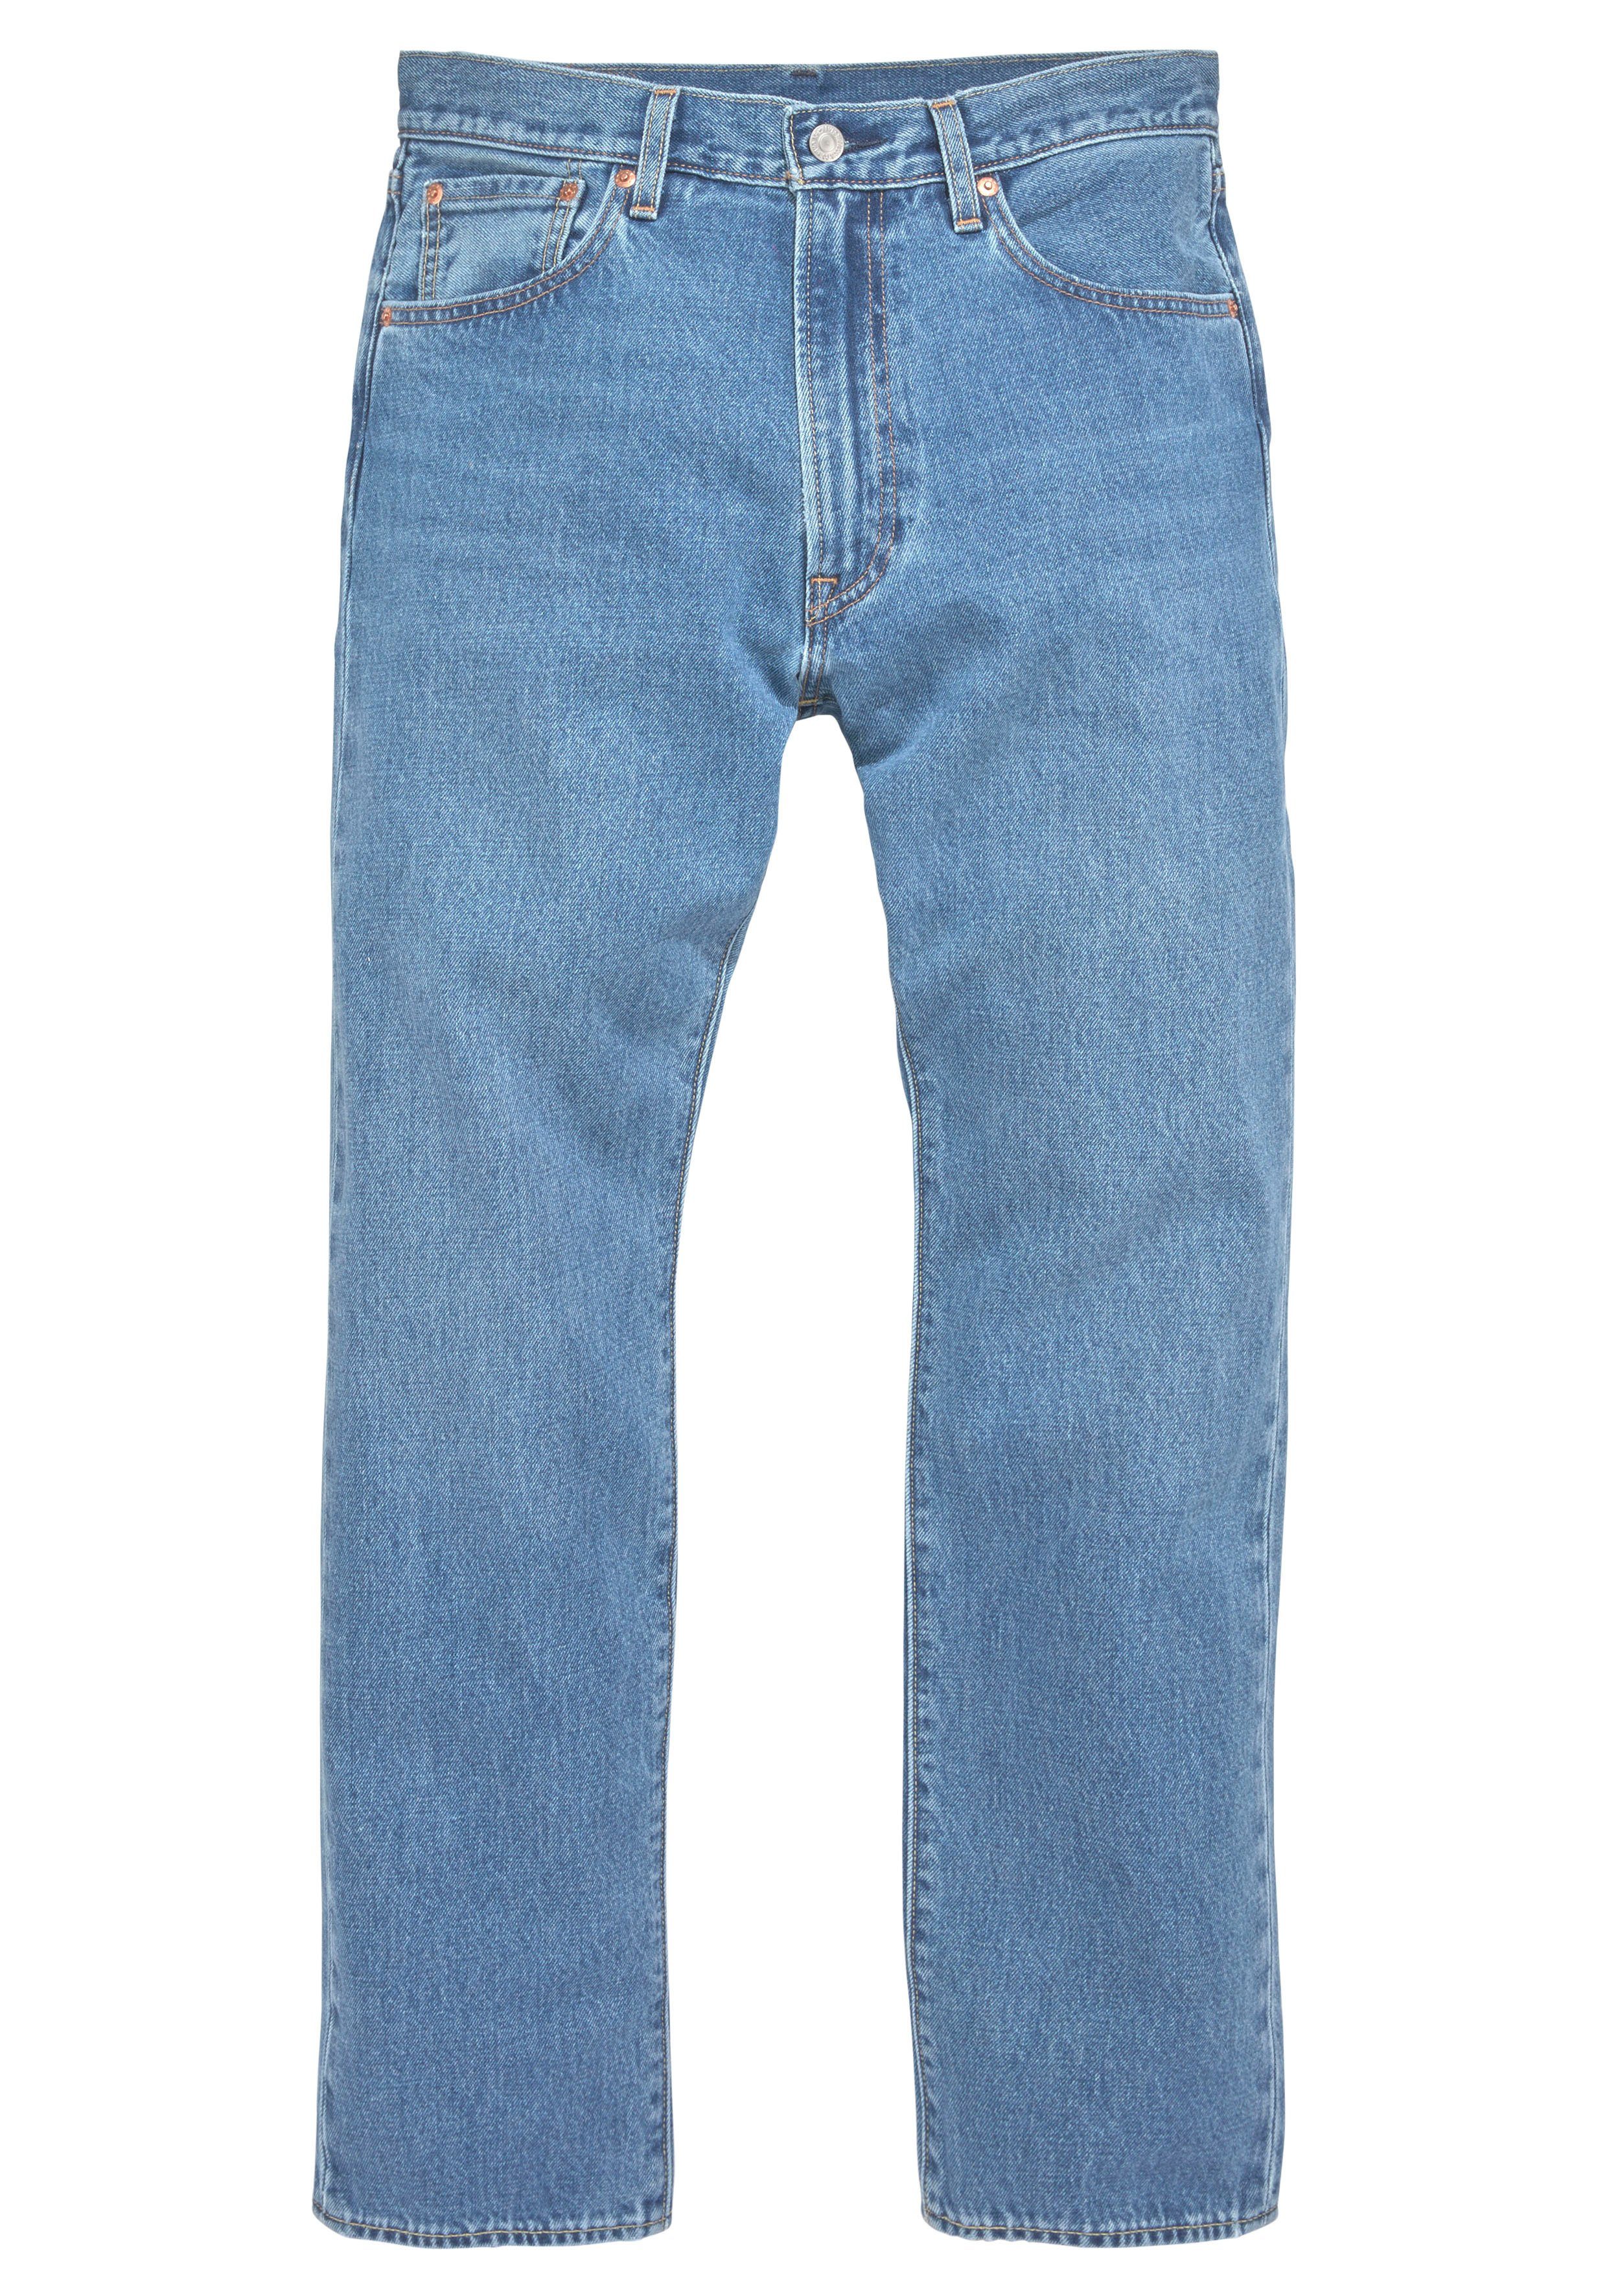 Z0873 551Z I MEDIUM AUTHENTIC Lederbadge mit Straight-Jeans Levi's®